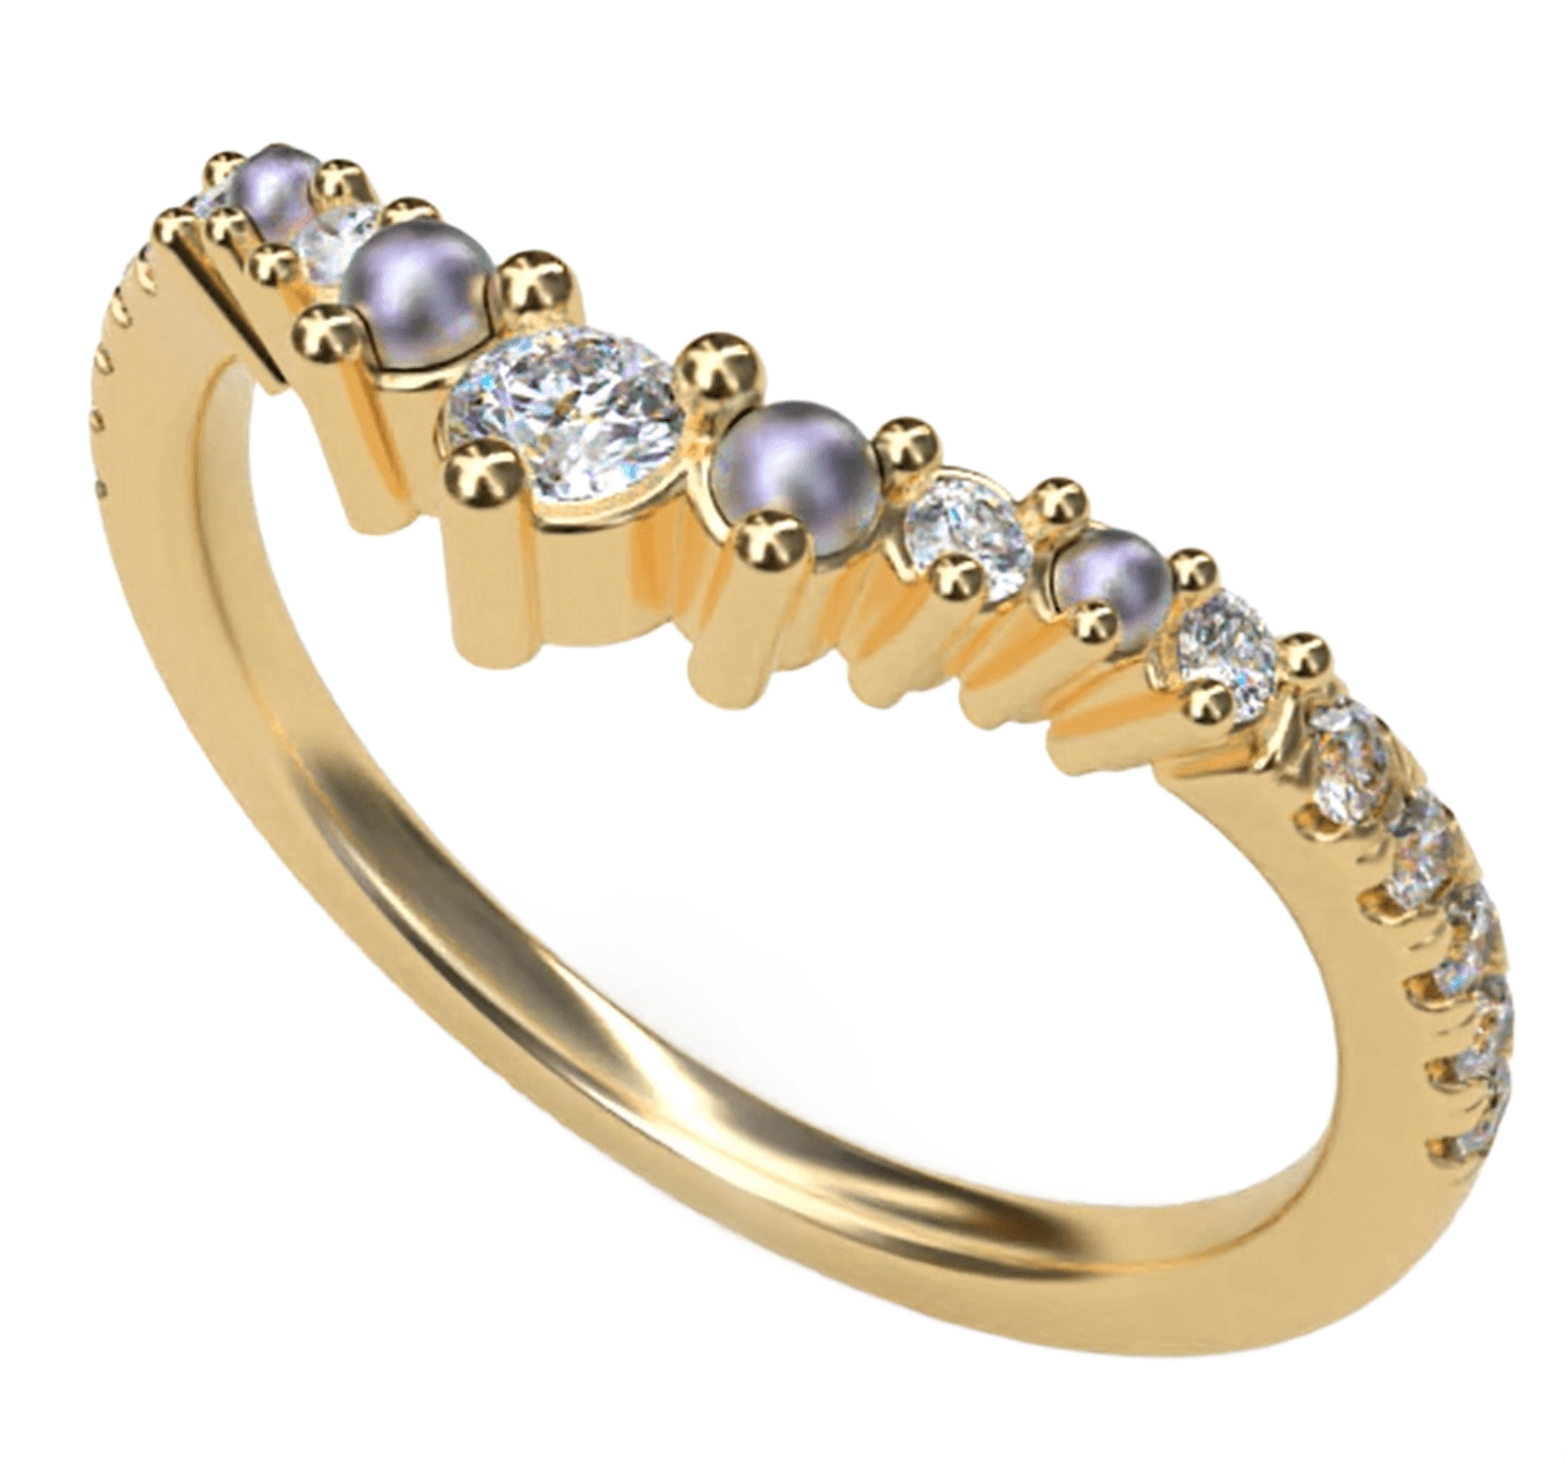 Custom Design - Pearl & Diamond 14kt Yellow Gold Ring - Deposit - The Rutile Ltd